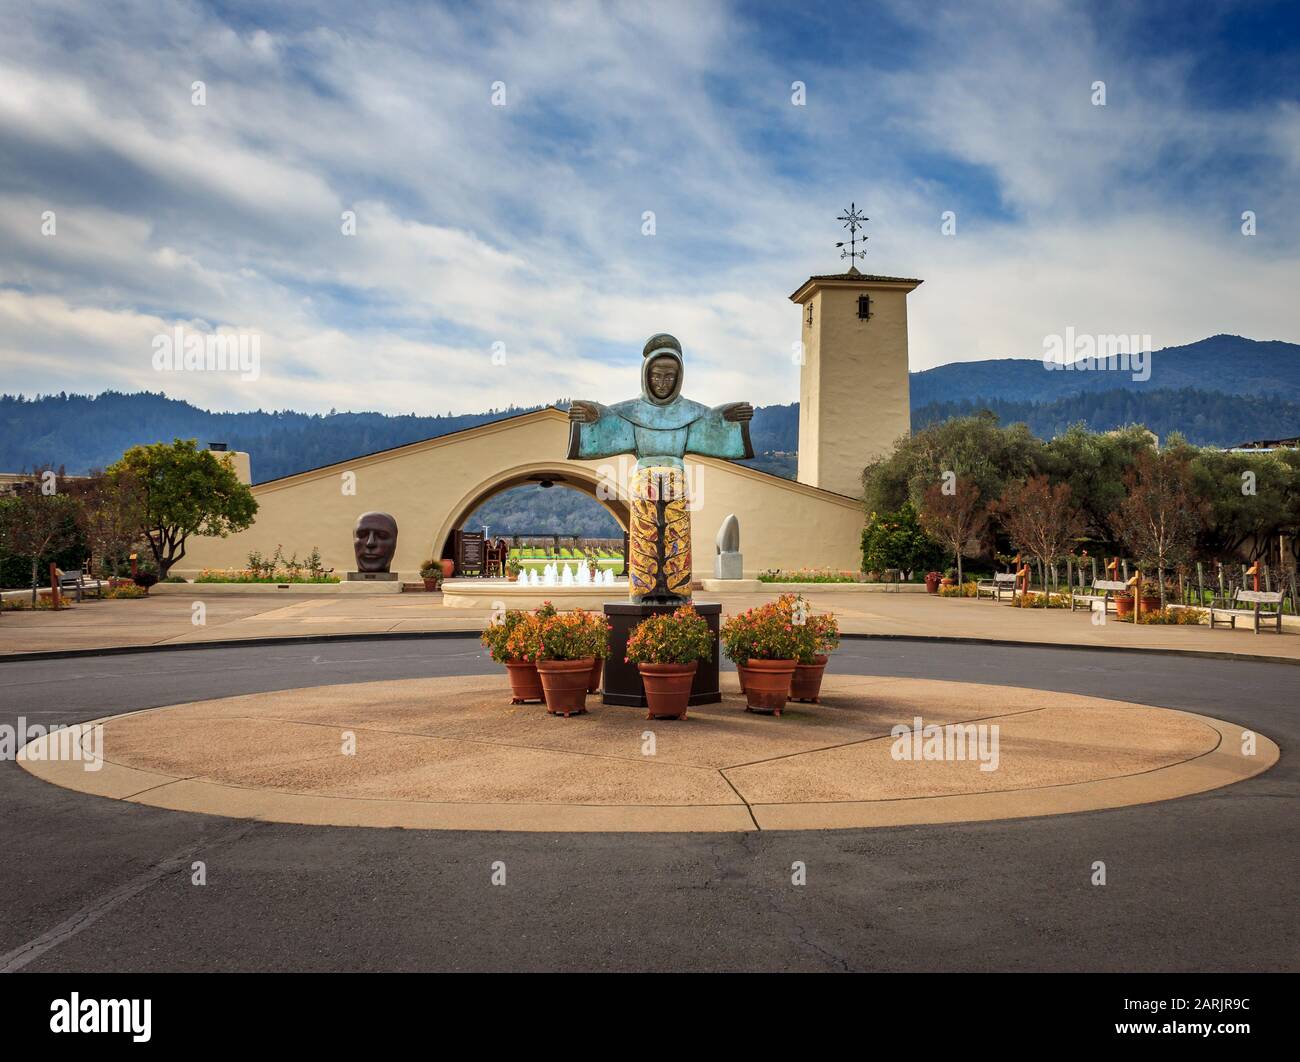 Napa, California, United States of America - January 12, 2016 : The entrance to the Robert Mondavi Winery in Napa, California Stock Photo